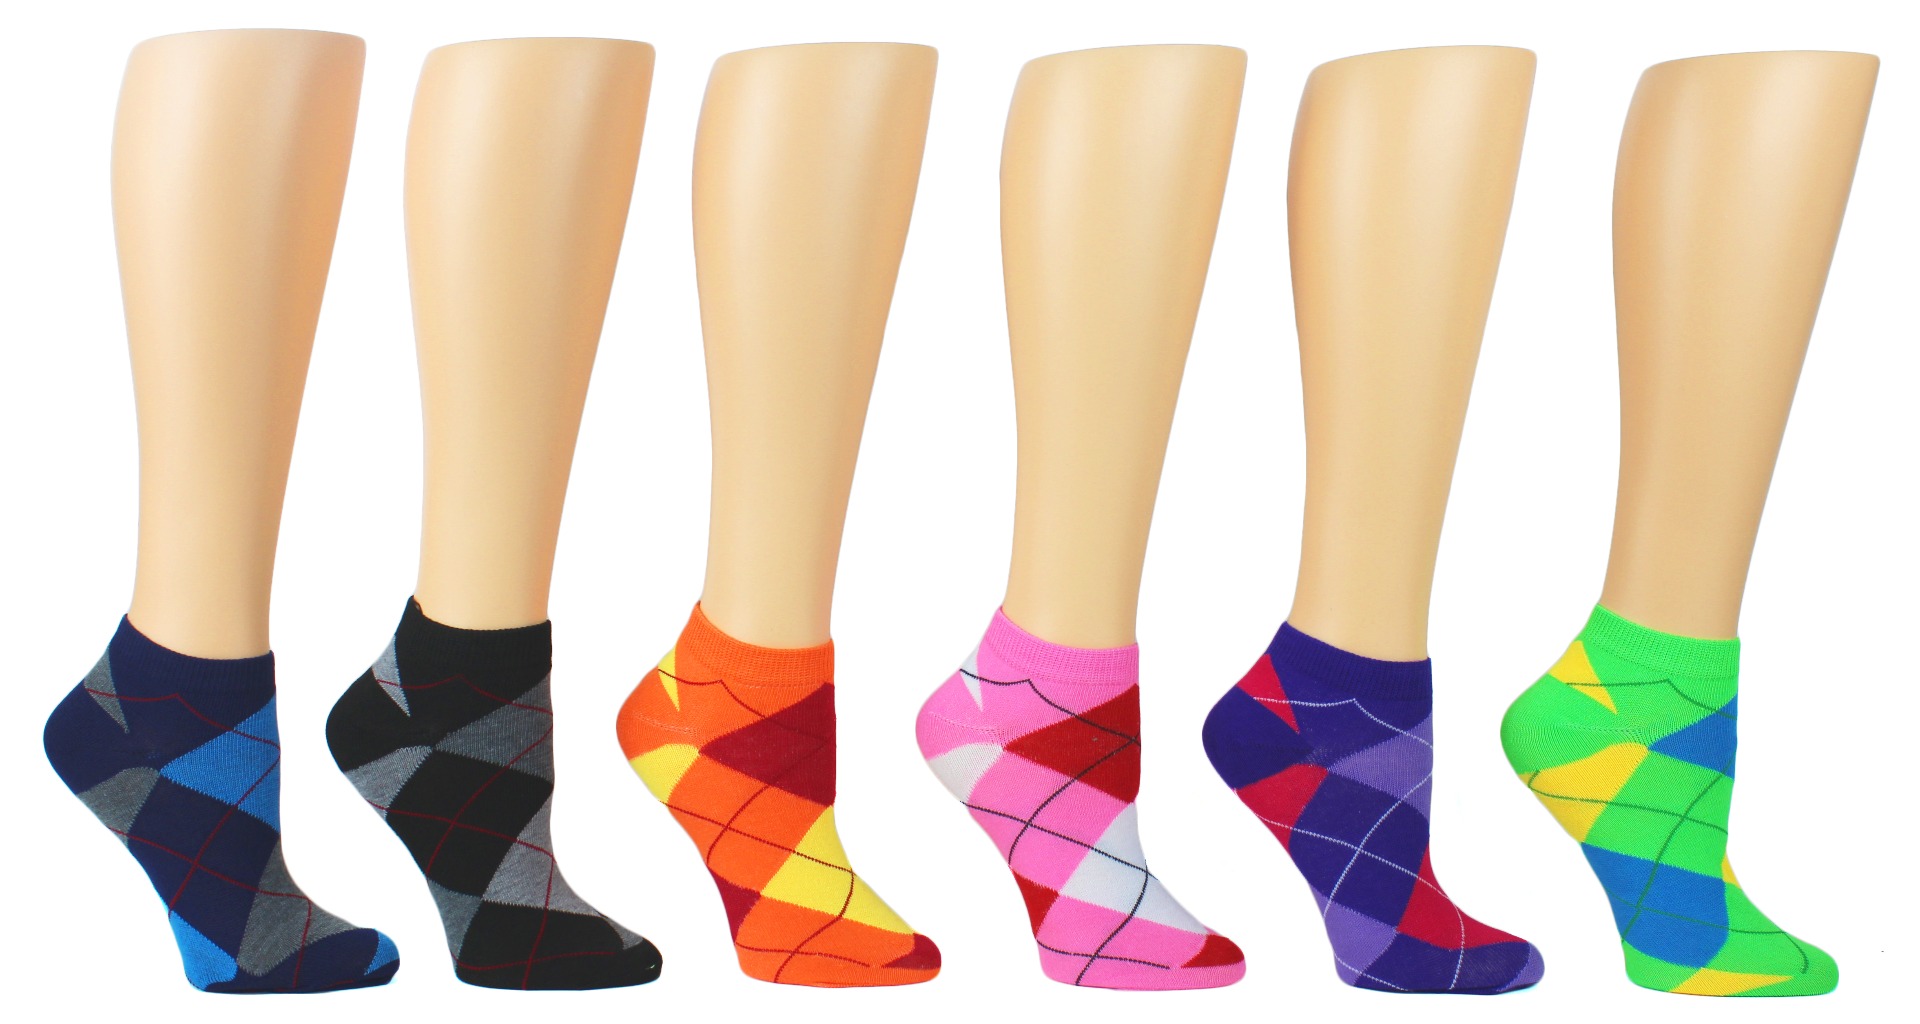 Women's Low Cut Novelty Socks - Argyle Print - Size 9-11